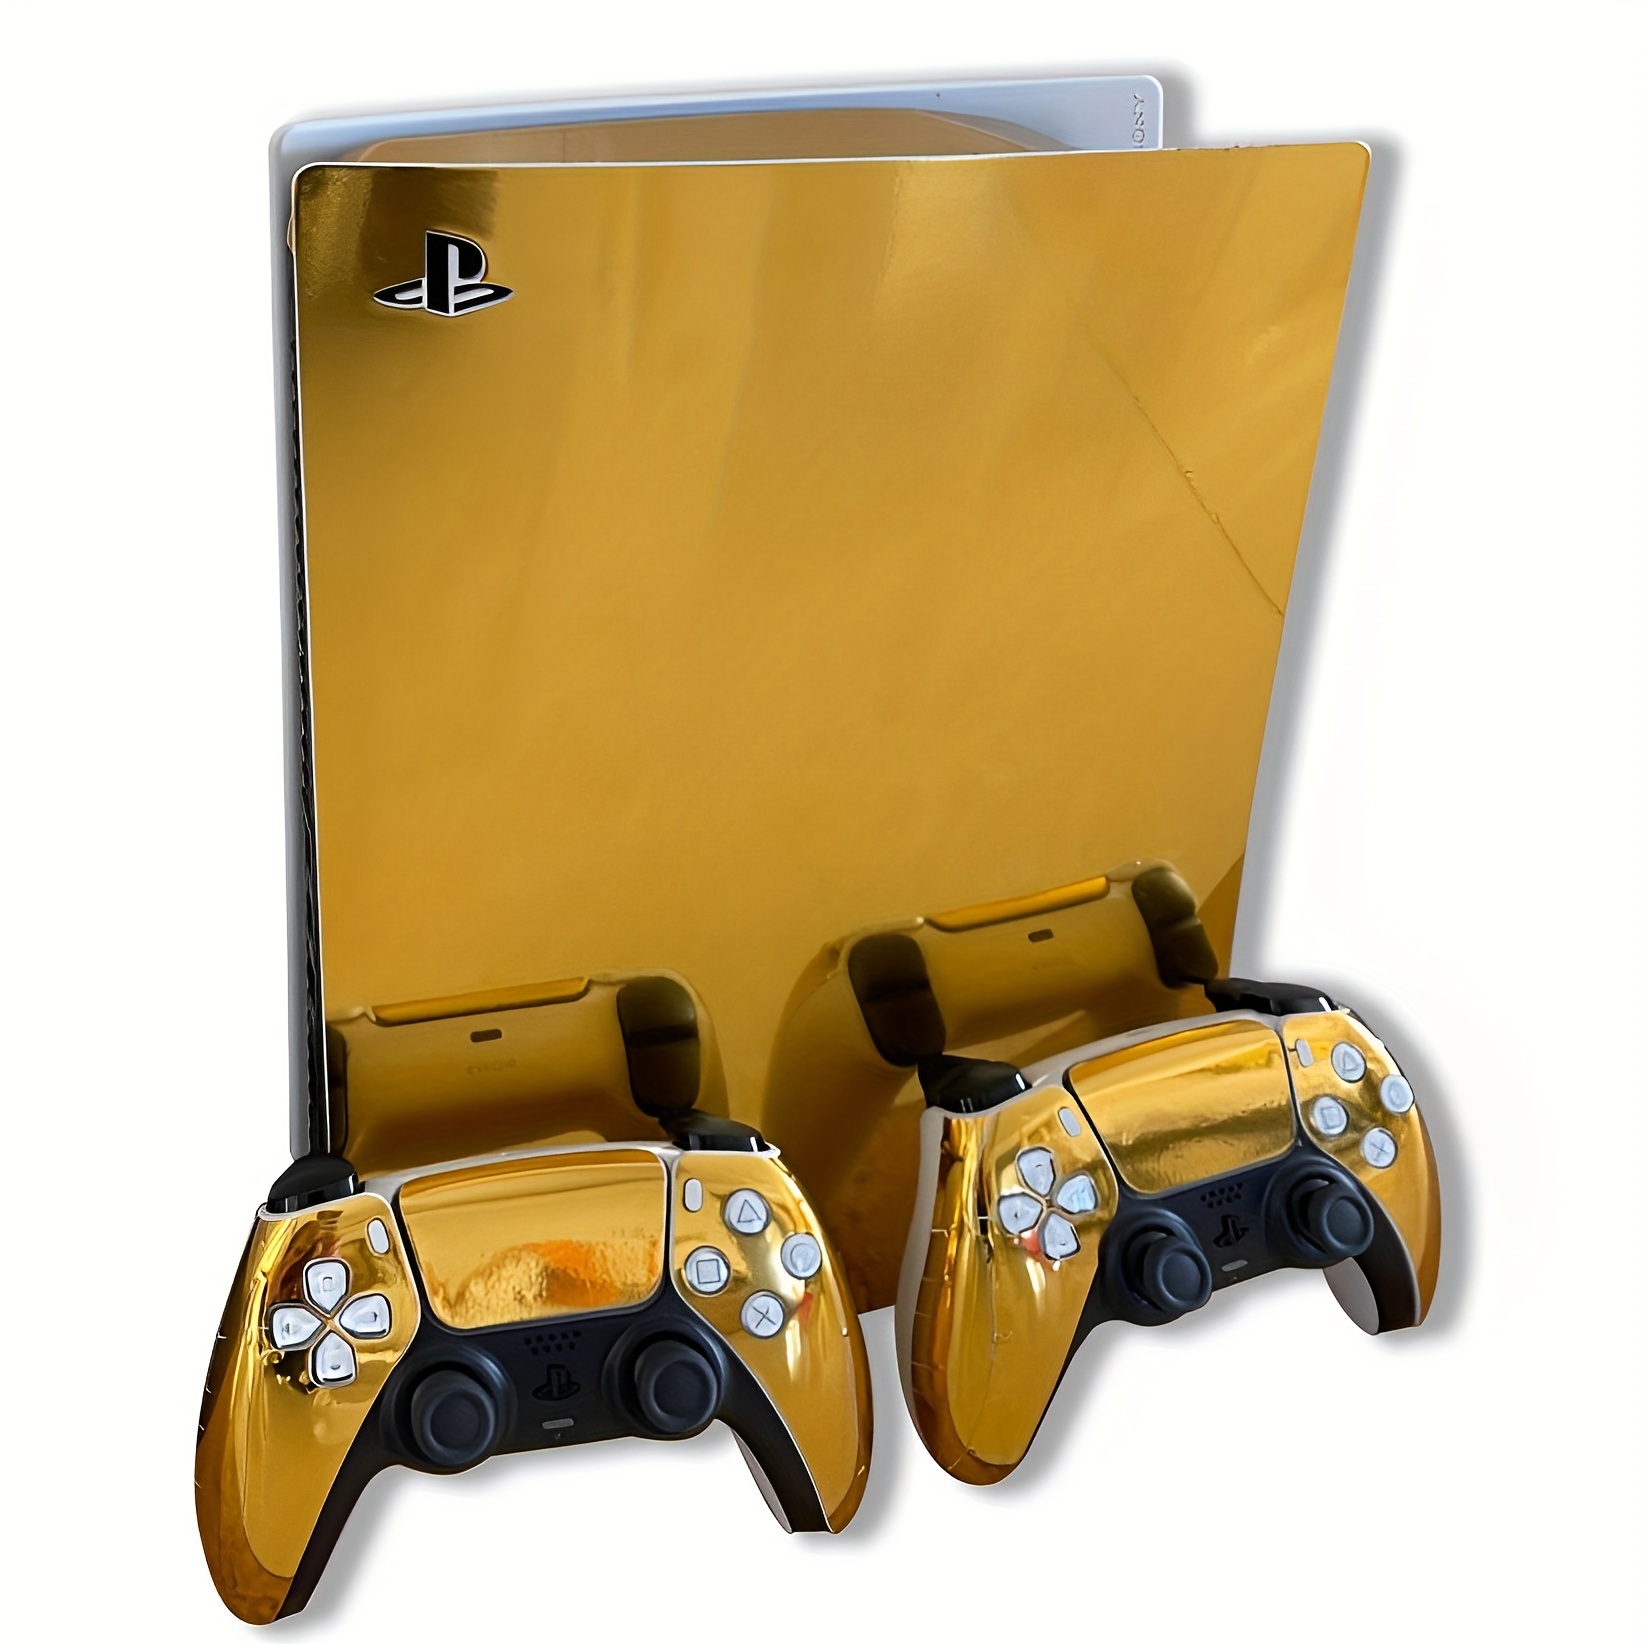 PlayStation 5 (PS5) DIGITAL EDITION Rose Gold Metallic Skin, Wrap